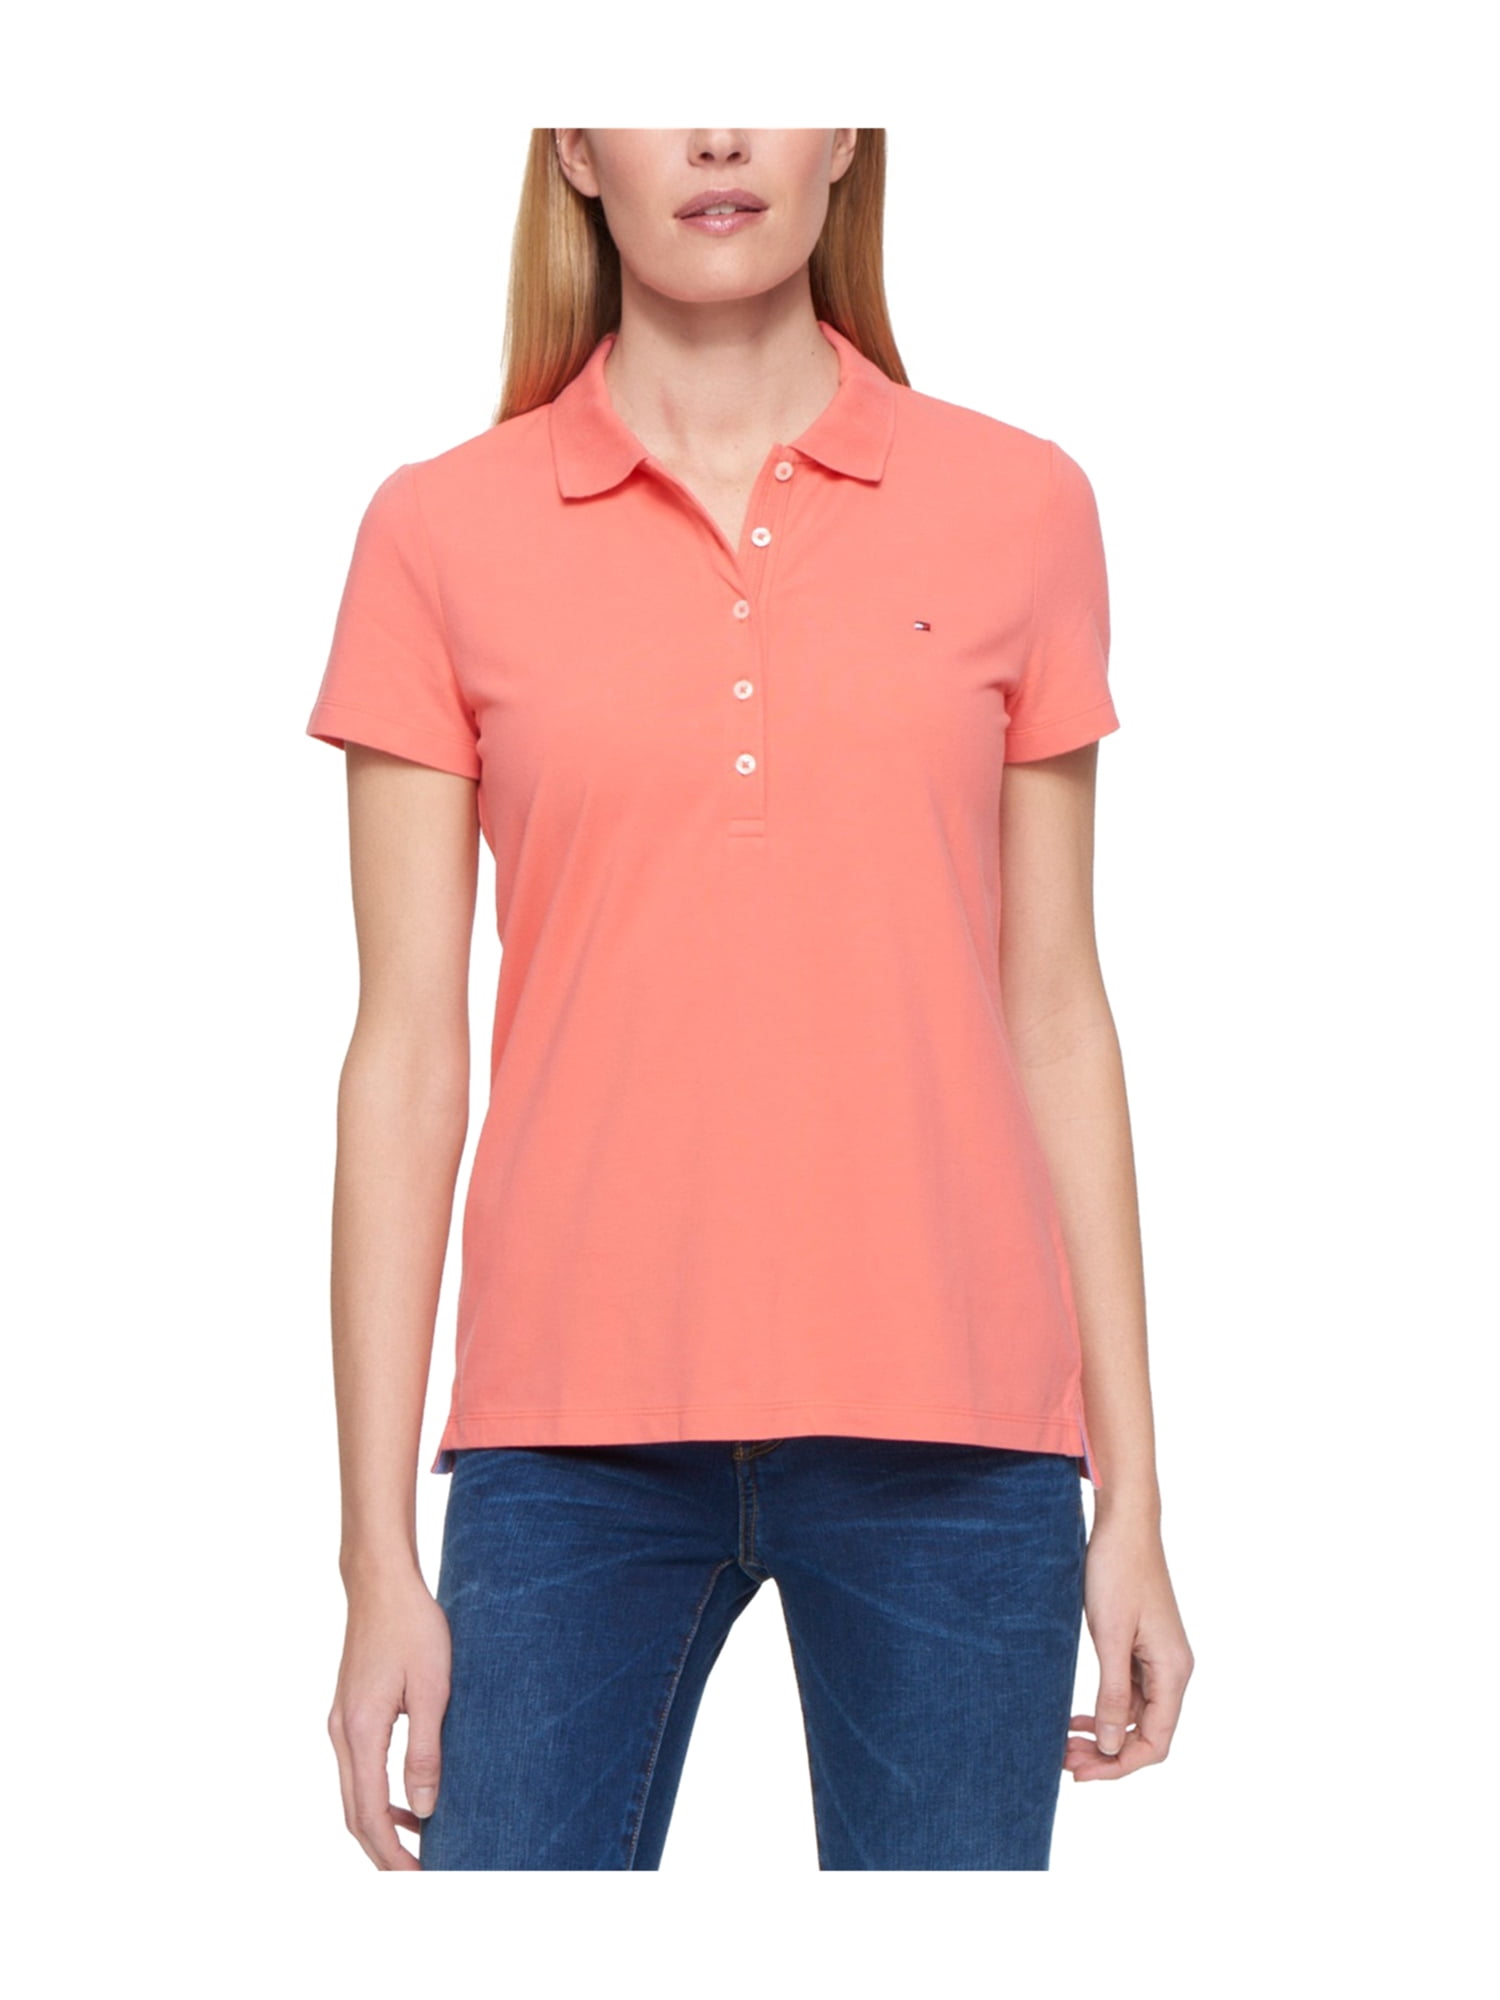 Tommy Hilfiger - Tommy Hilfiger Womens Basic Polo Shirt - Walmart.com ...